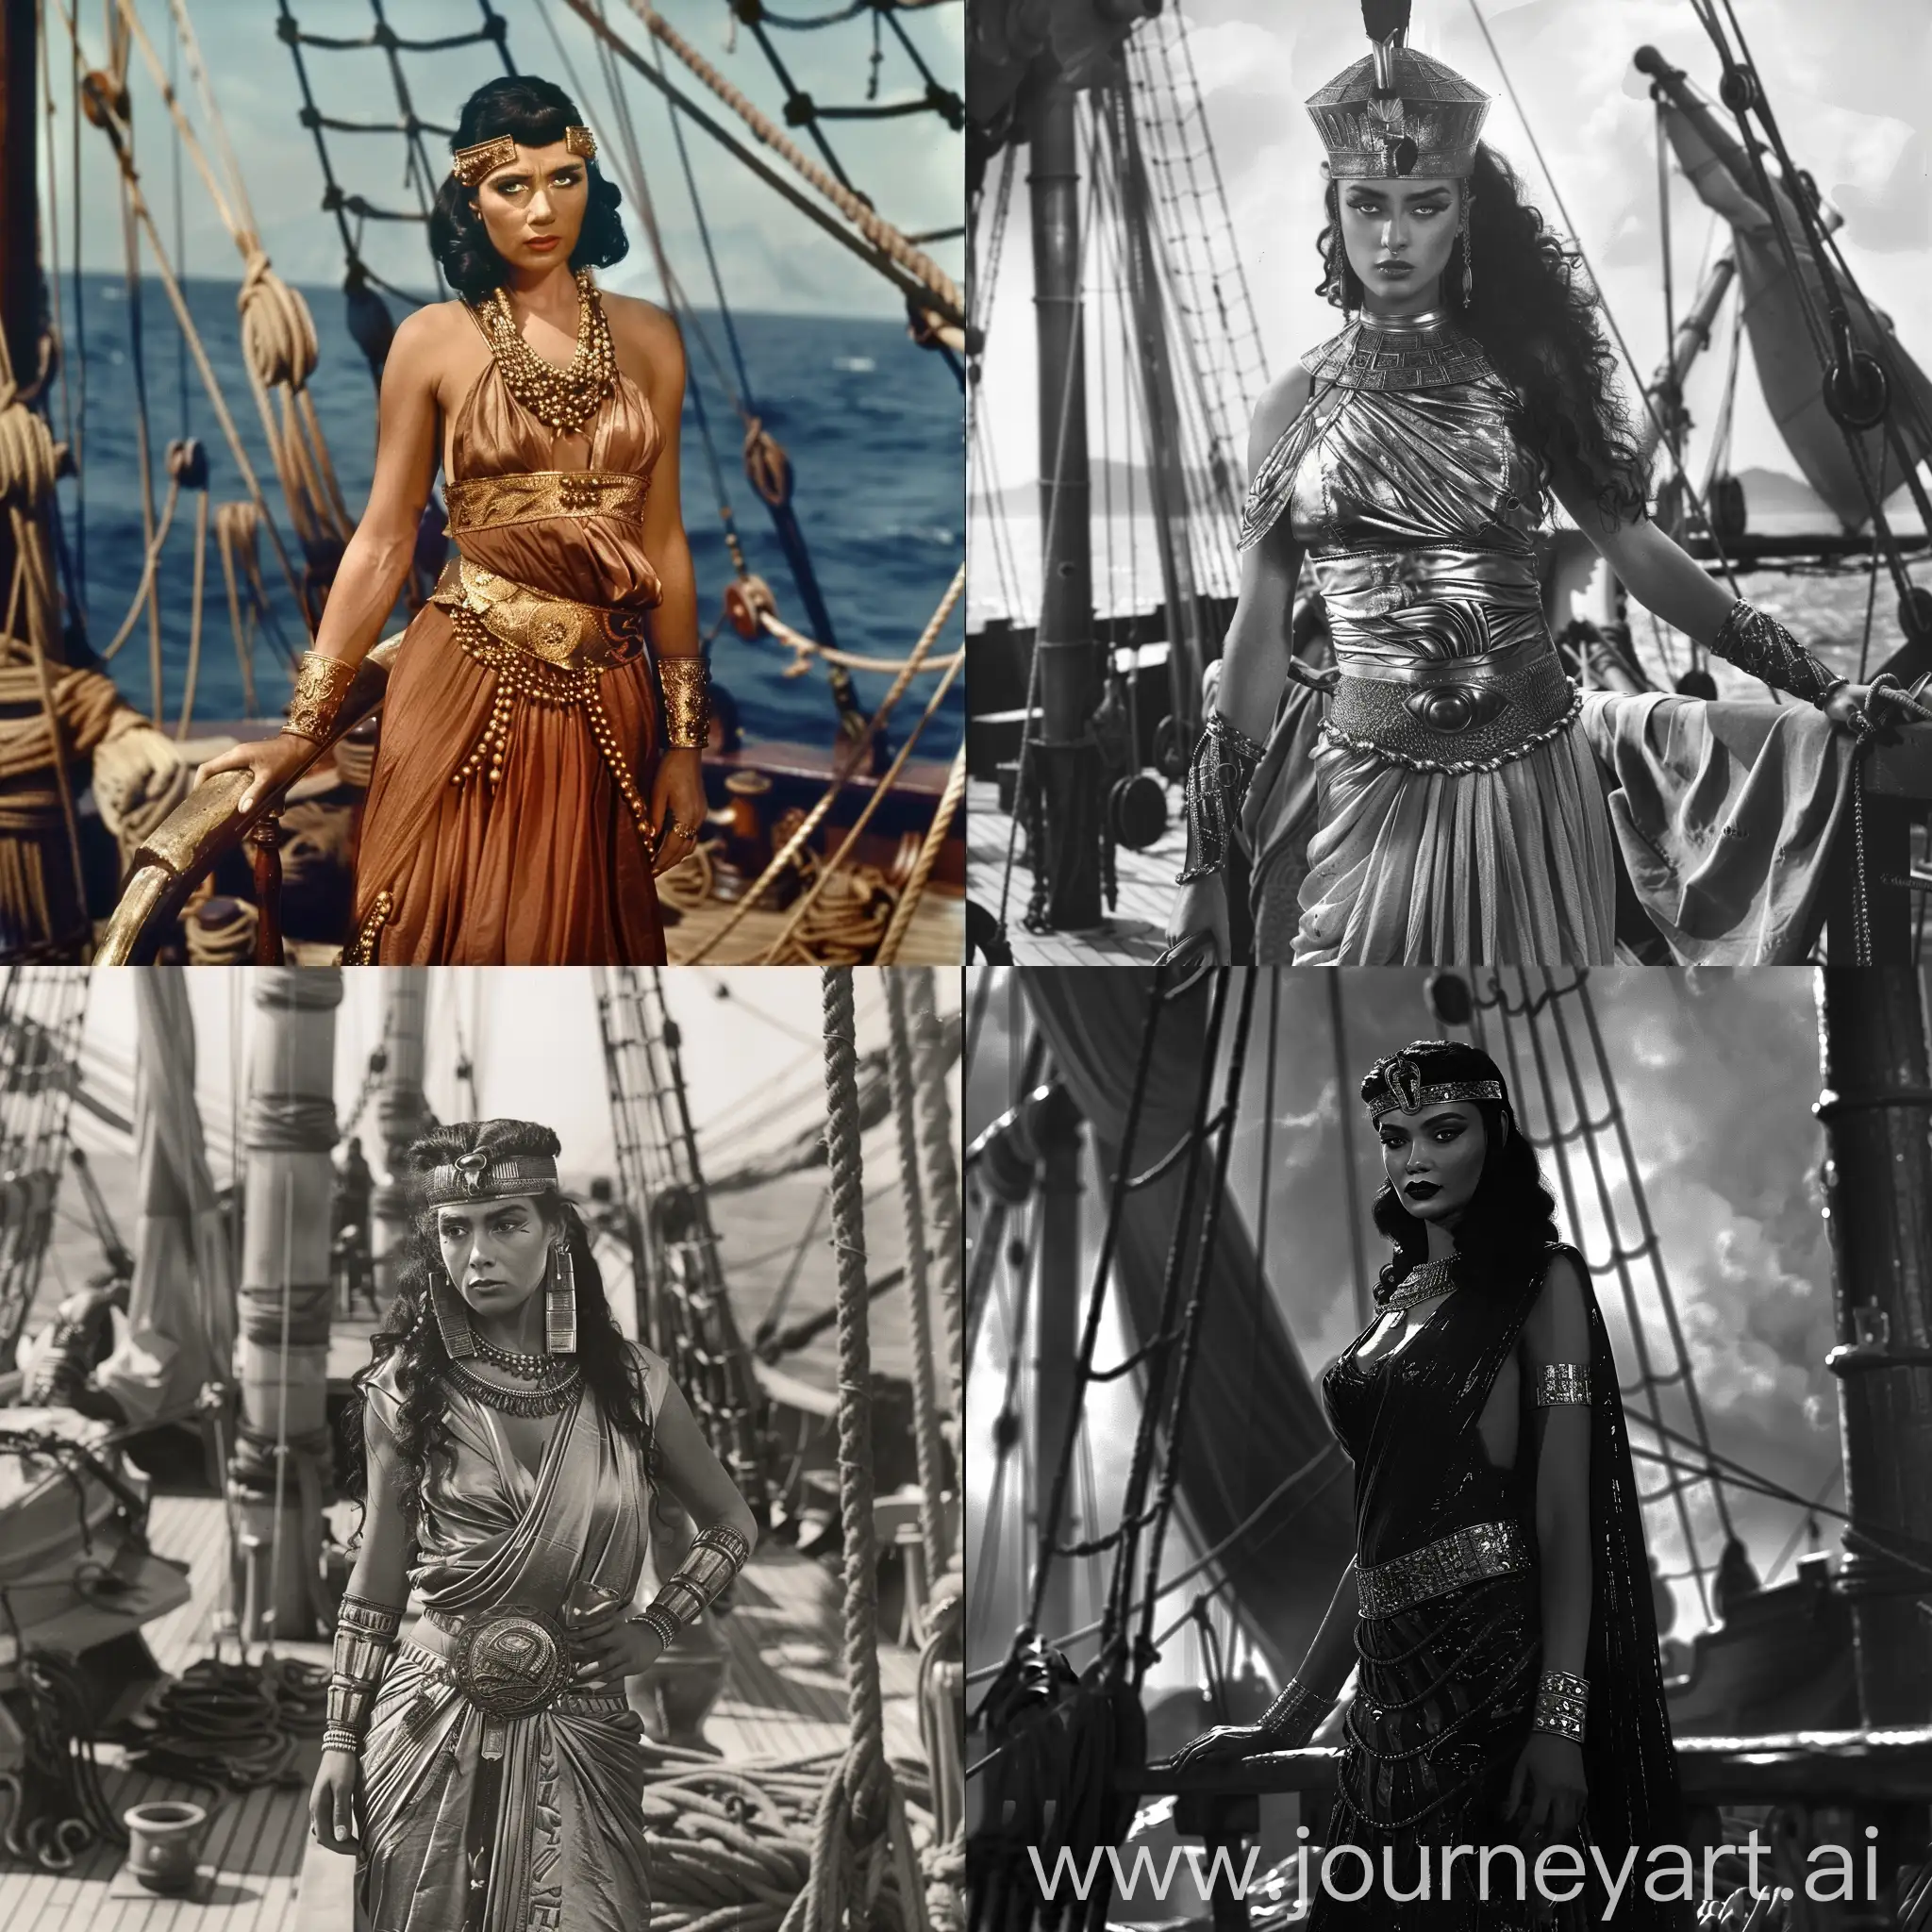 Ancient-Queen-Cleopatra-Commanding-a-Naval-Fleet